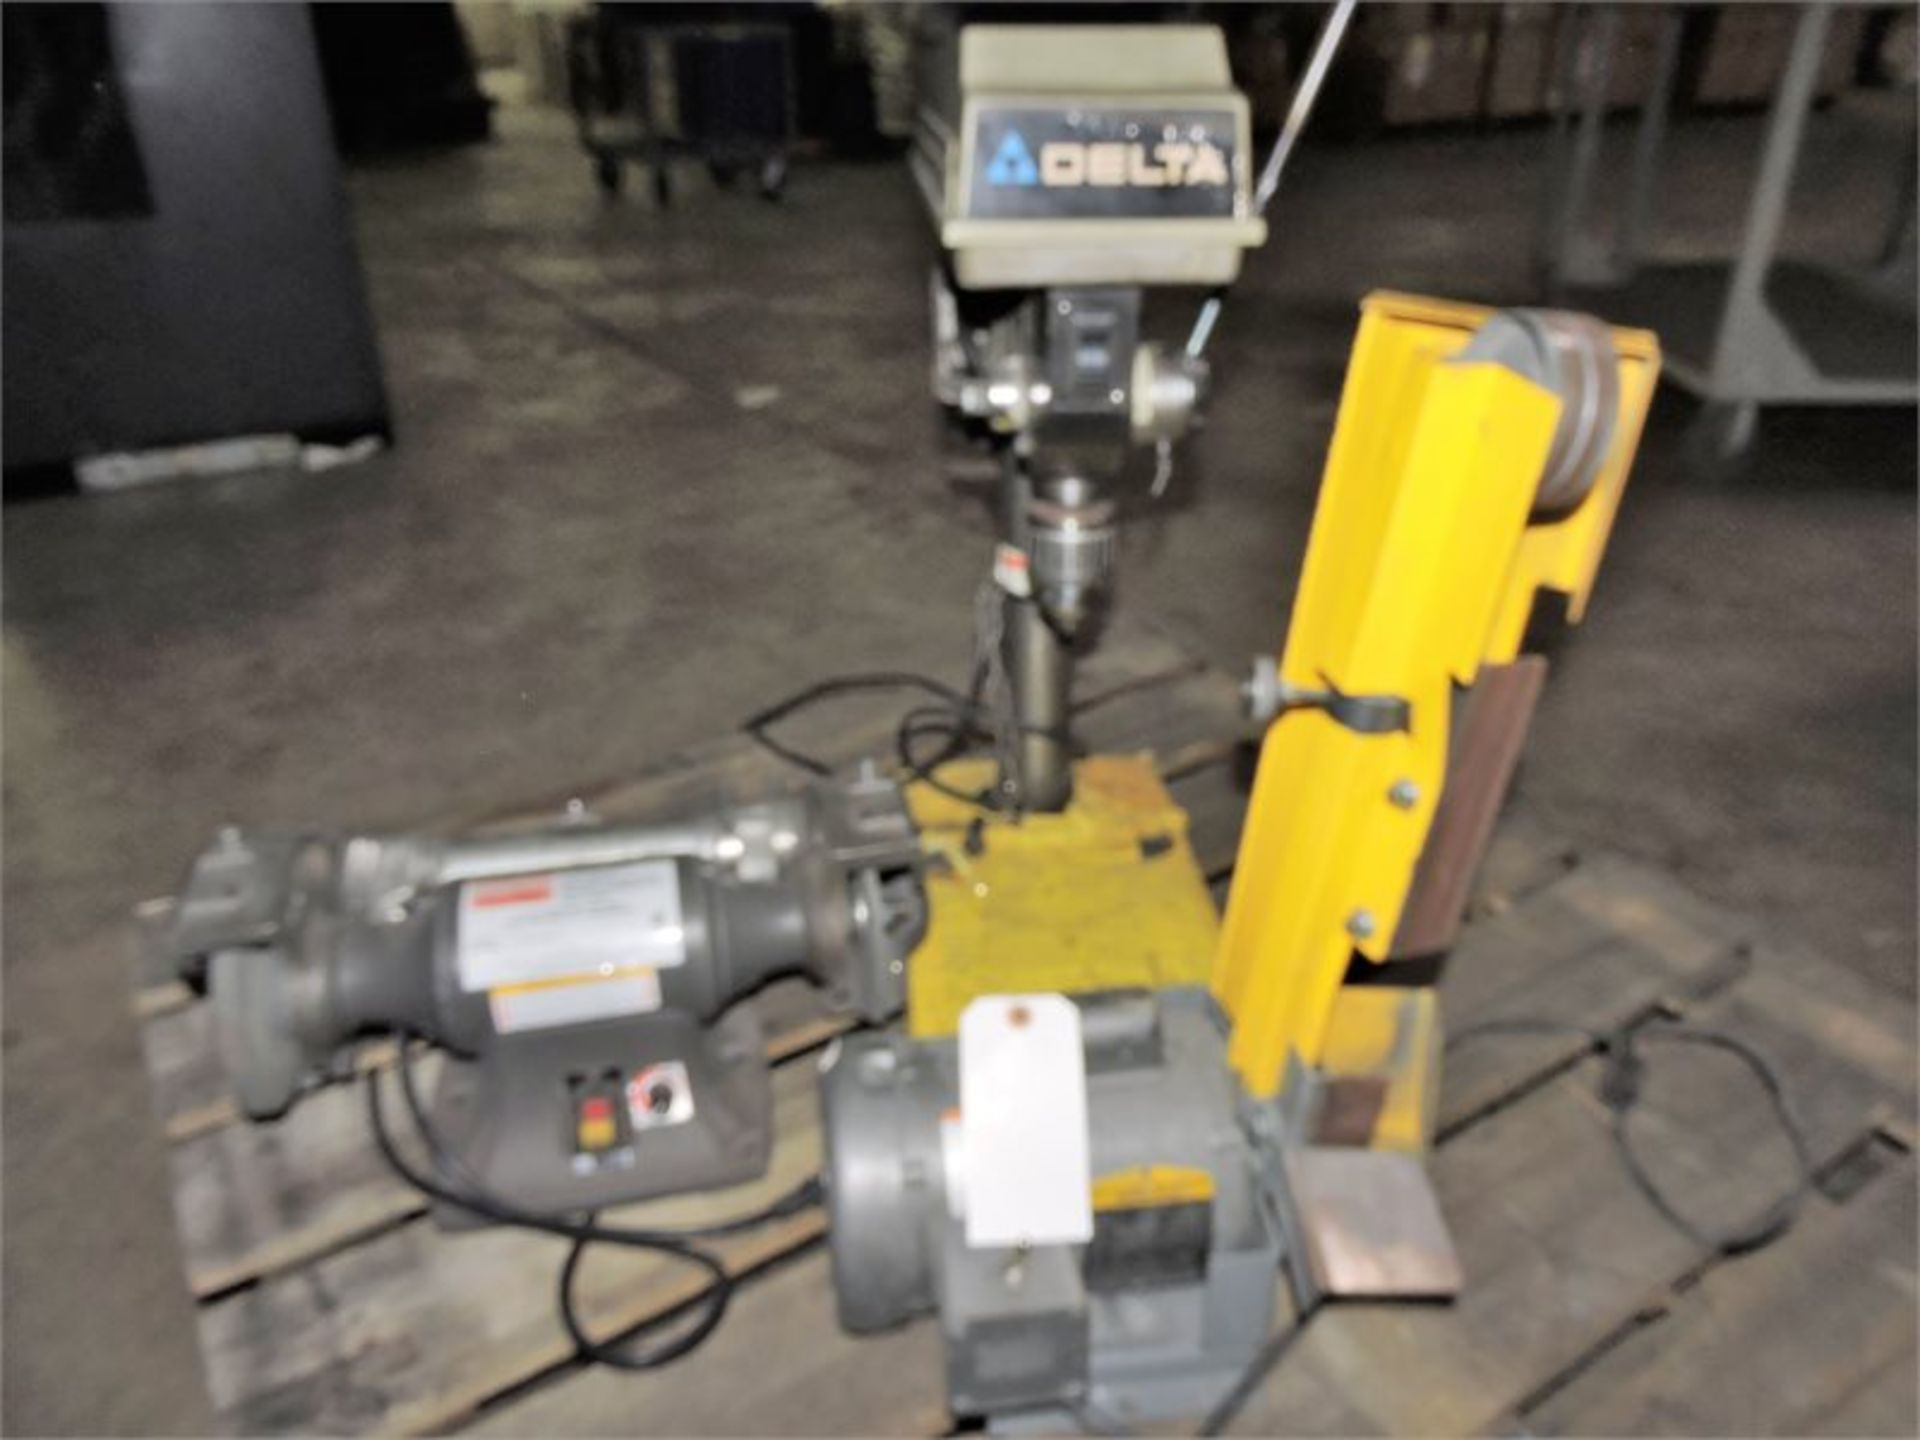 1 Delta drill press on 12” x ½” with motor / kalamazoo sander/ 6” benchgrinder on pallet - Image 2 of 3